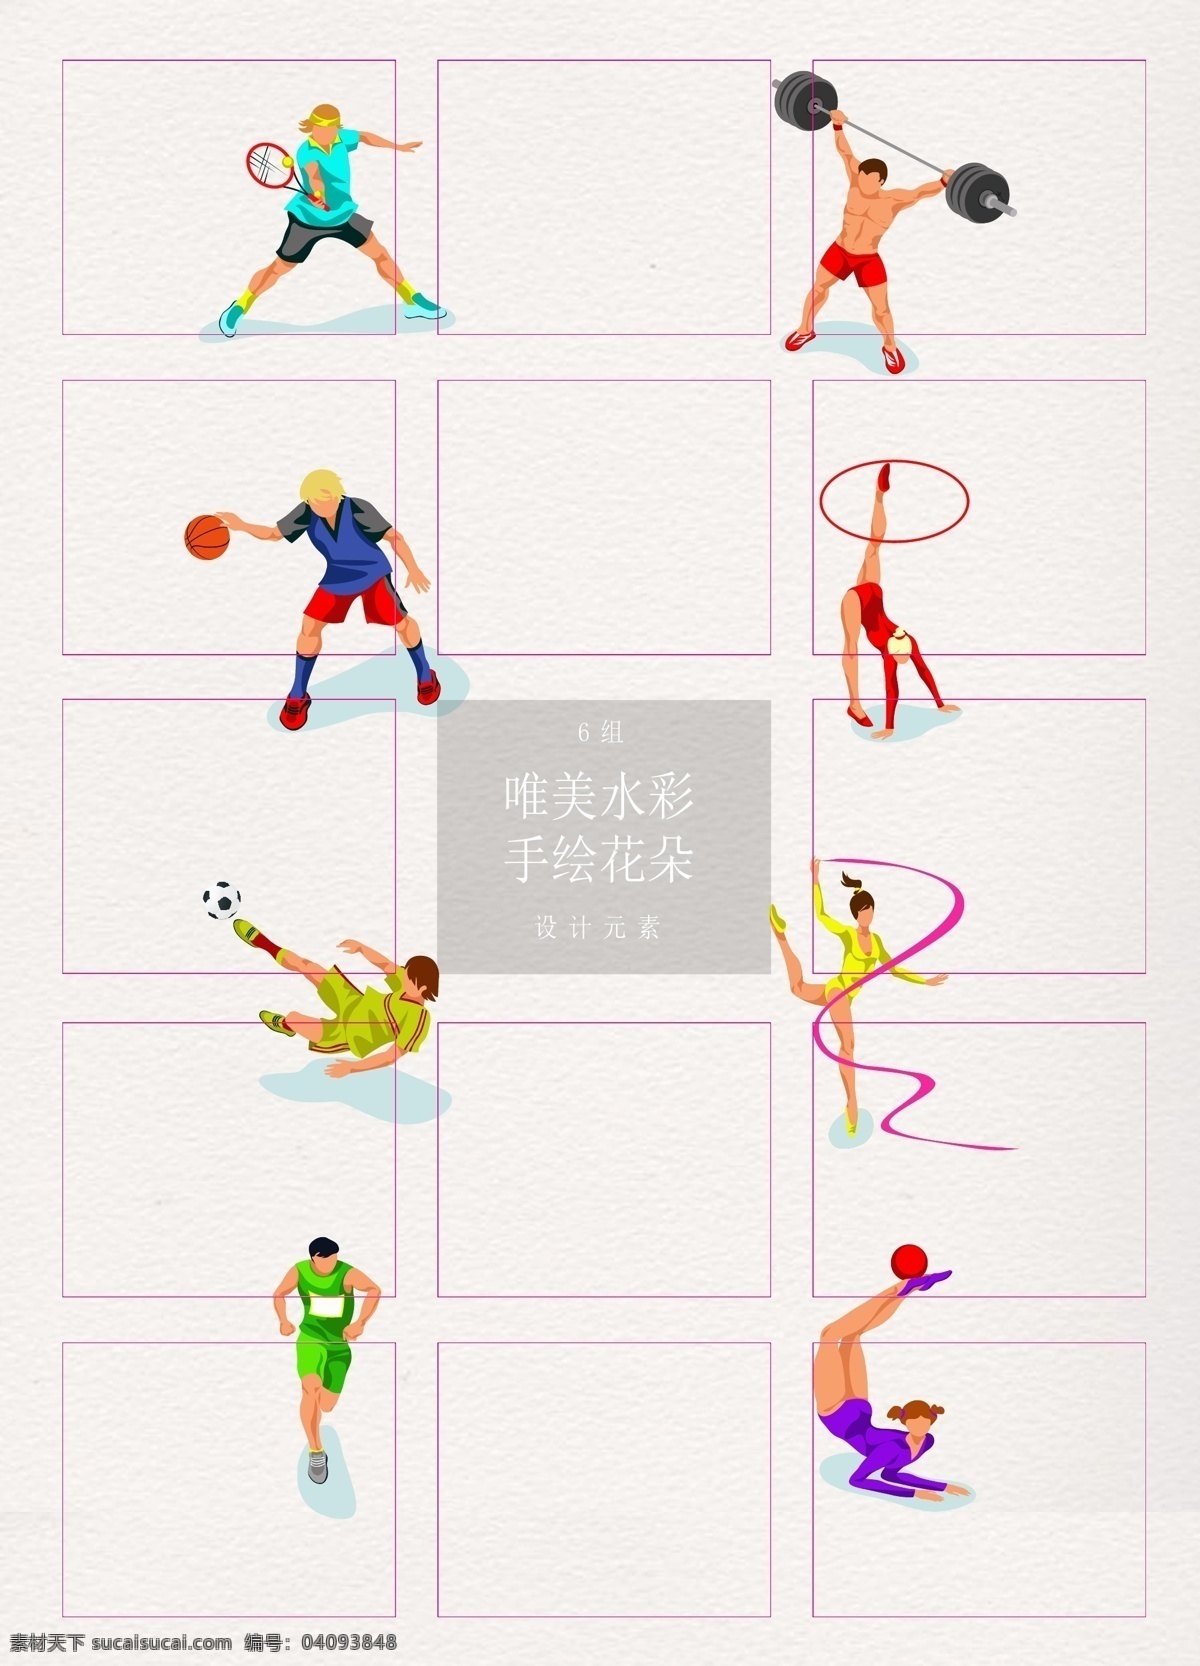 d 简约 运动员 人物 设计素材 矢量图 篮球 足球 2.5d 卡通 体育 比赛 网球运动 举重运动 花样溜冰 体操 跑步